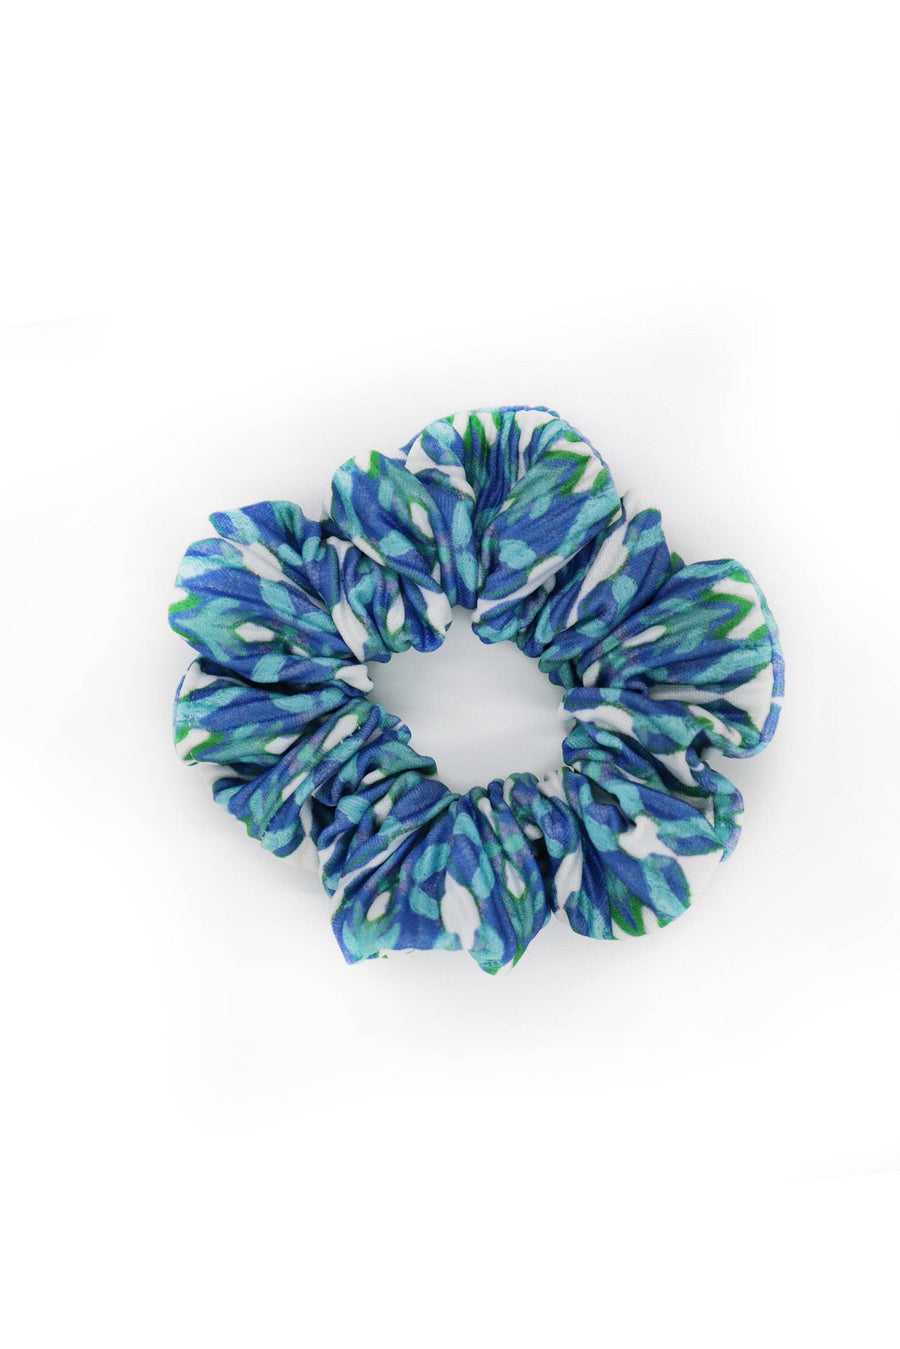 Pleated Scrunchie in Palladio Blue by Brooks Avenue